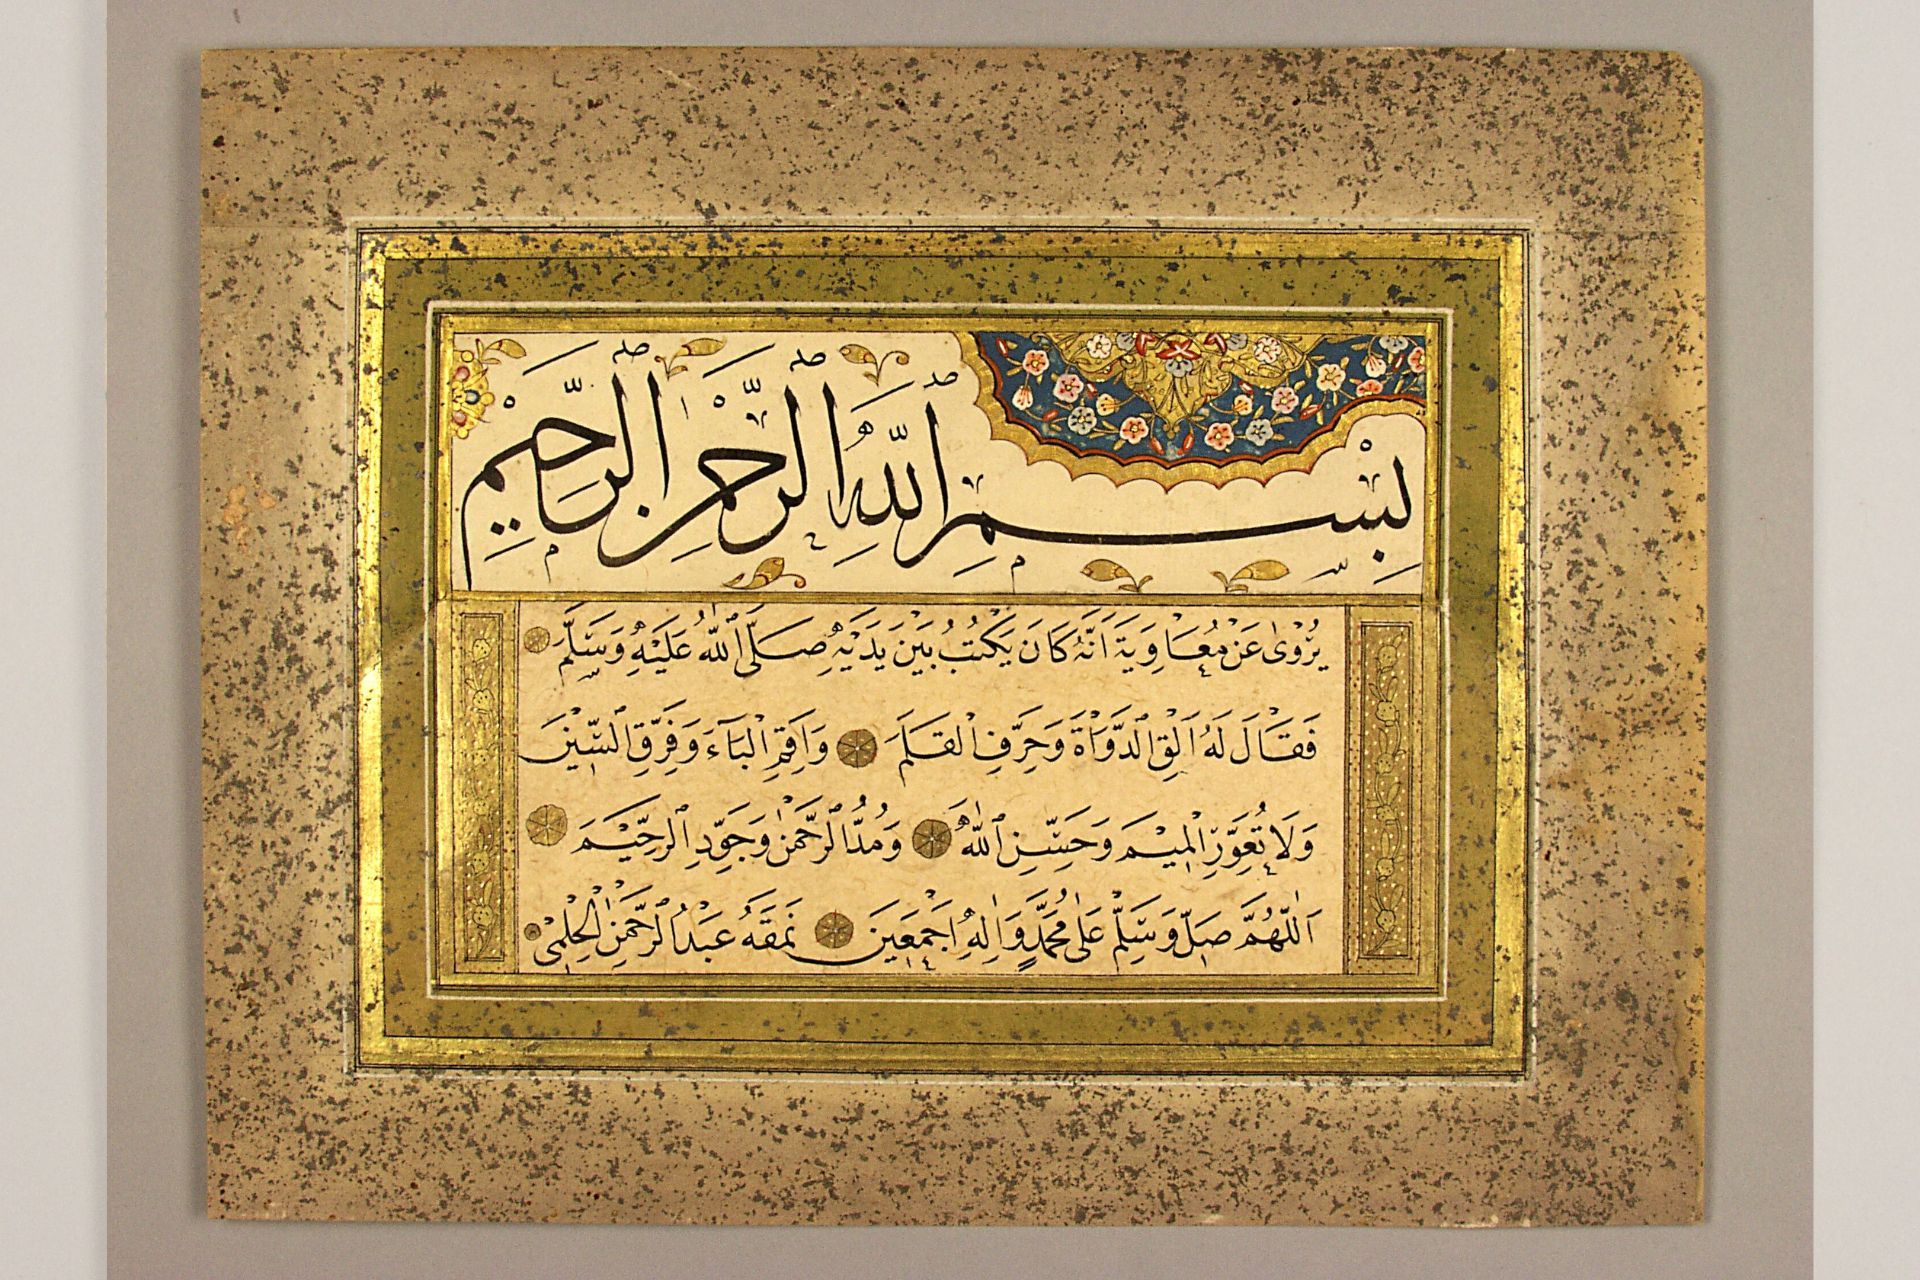 Manuscript page produced in Turkey, 1600-1699 CE